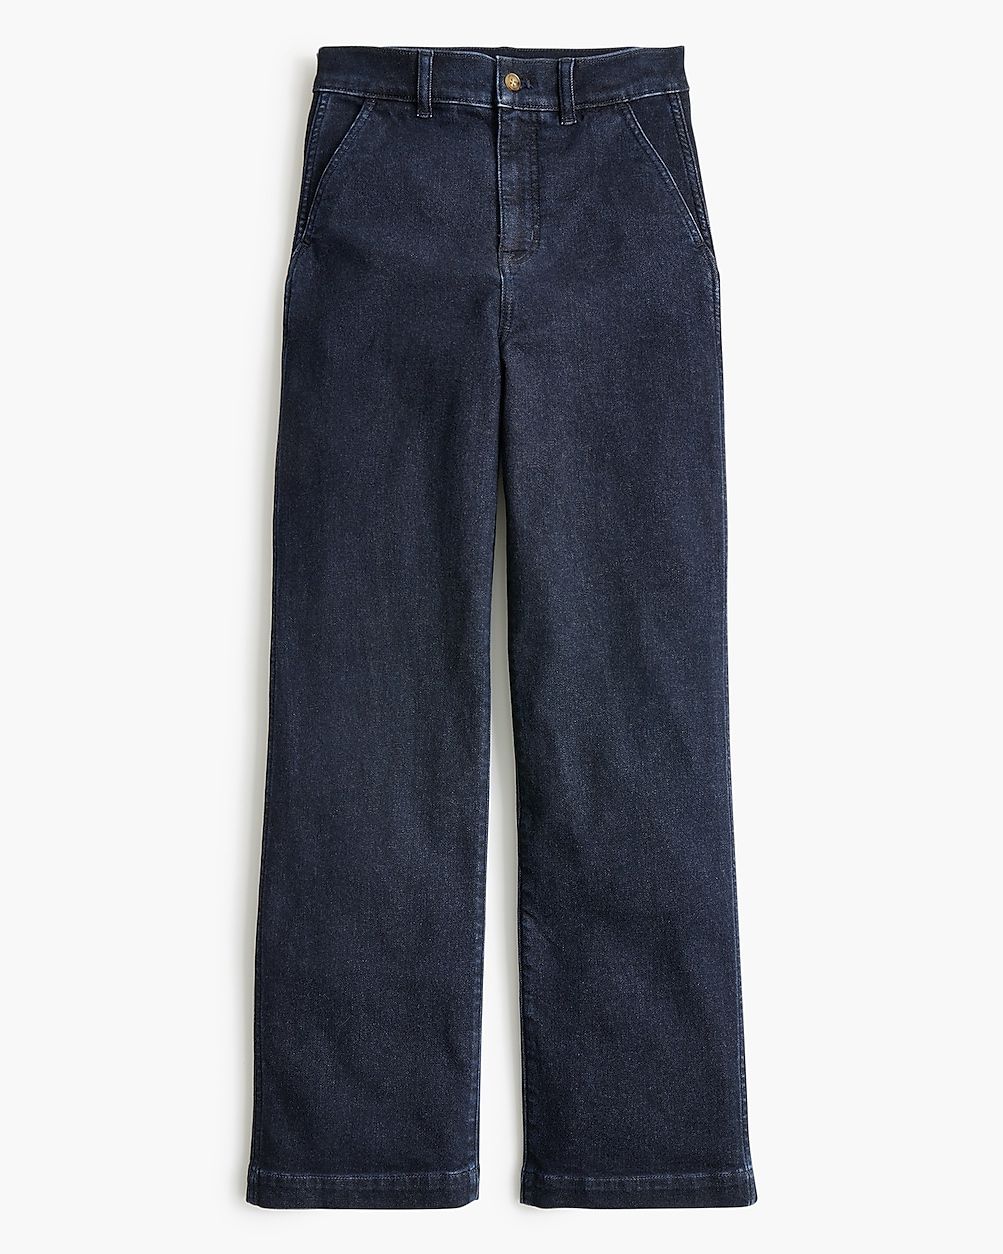 Denim trouser pant in signature stretch | J.Crew Factory